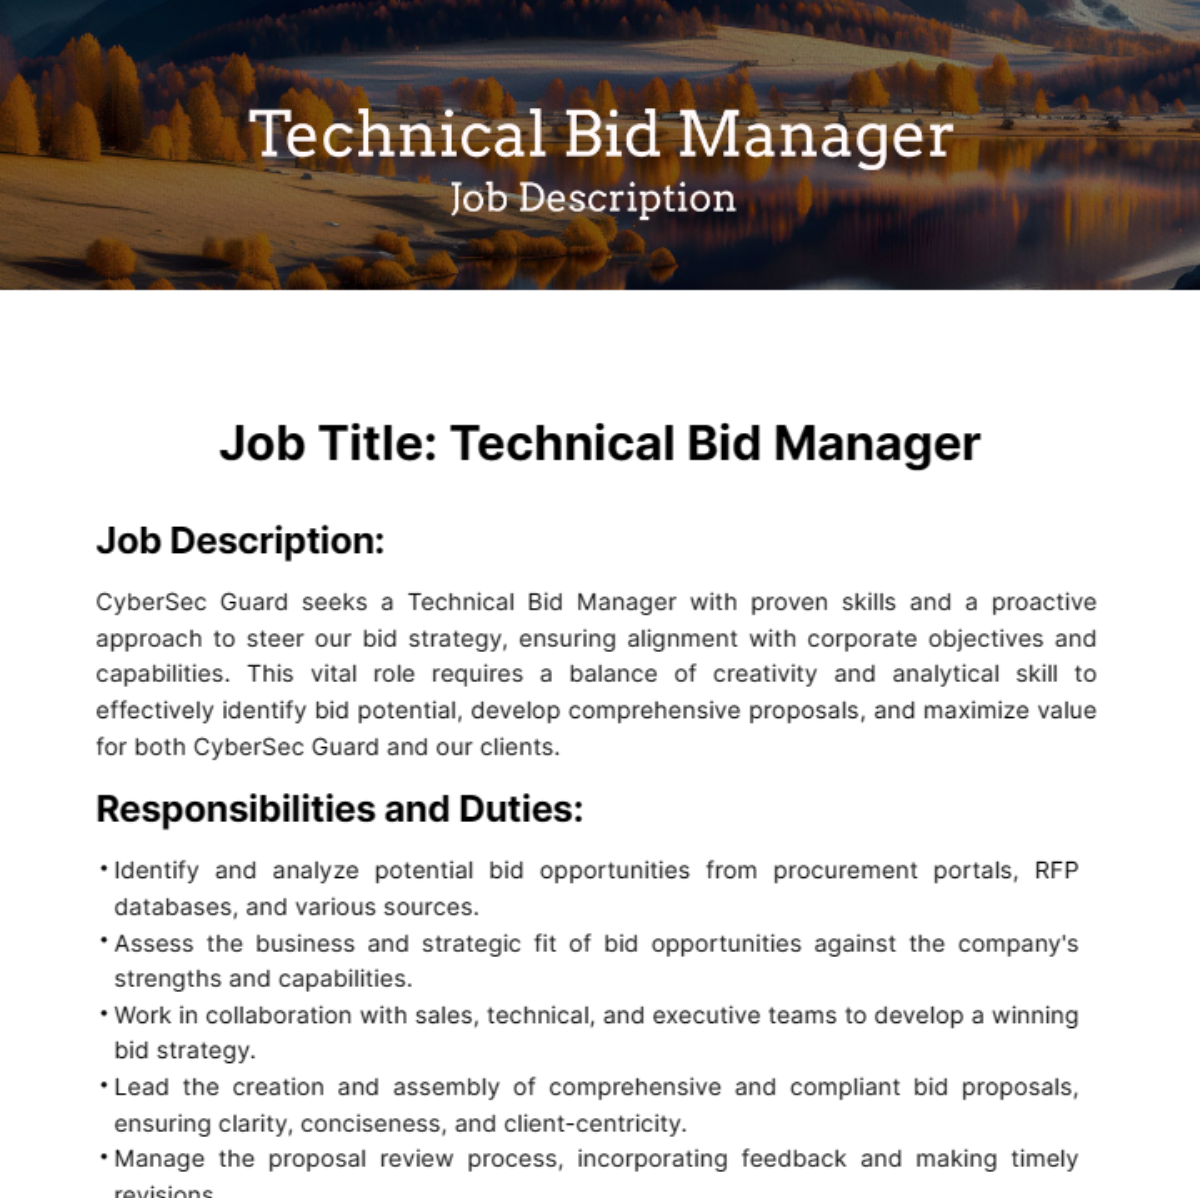 Technical Bid Manager Job Description Template